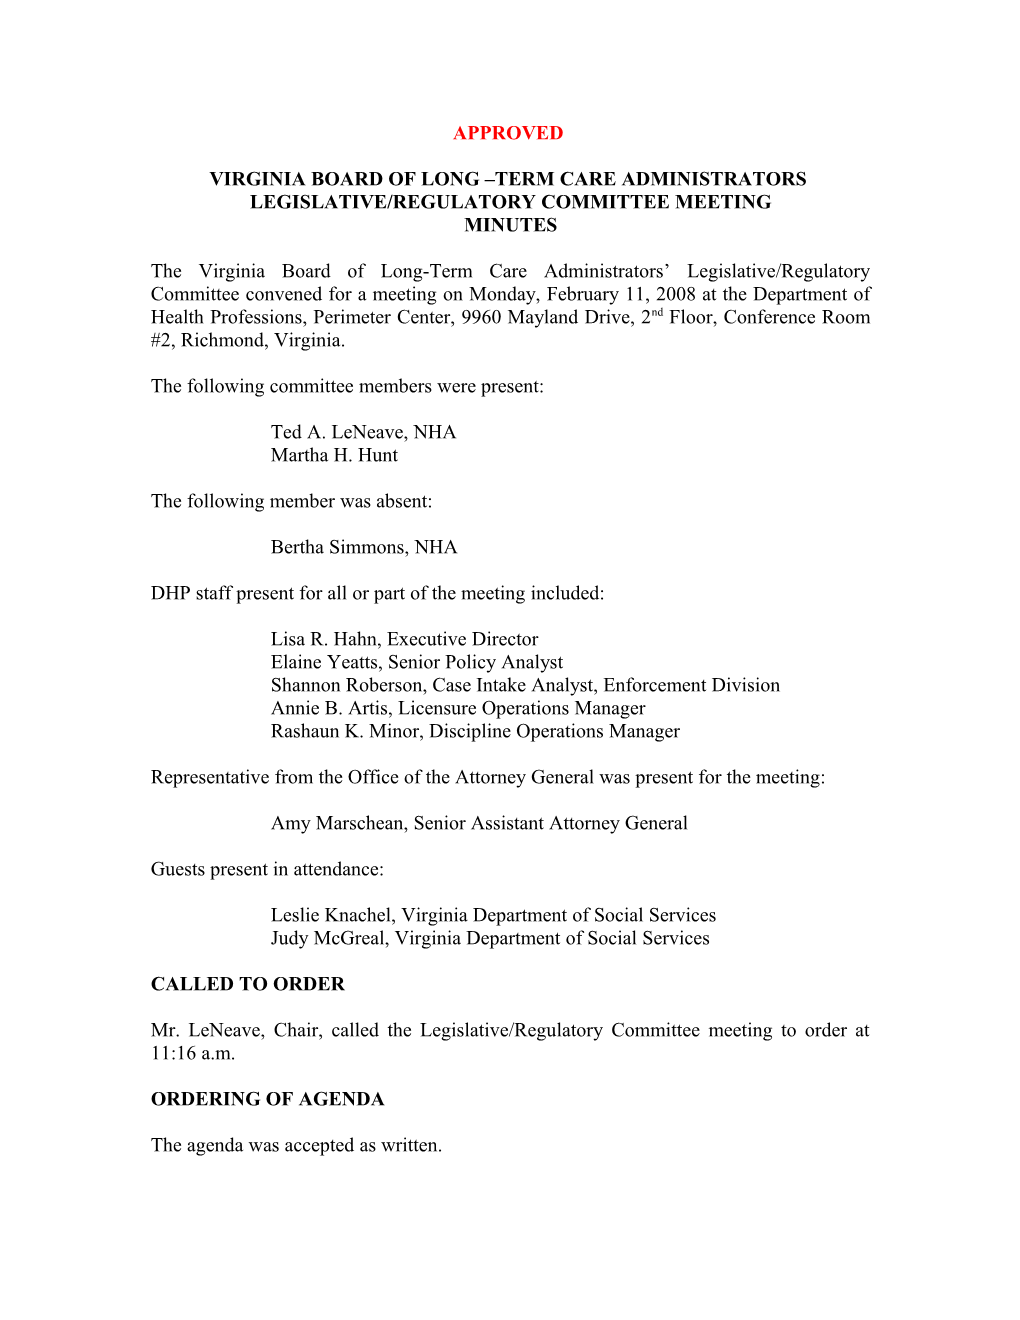 Board of Long-Term Care Administrators - Legislative/Regulatory Committee Meeting Minutes